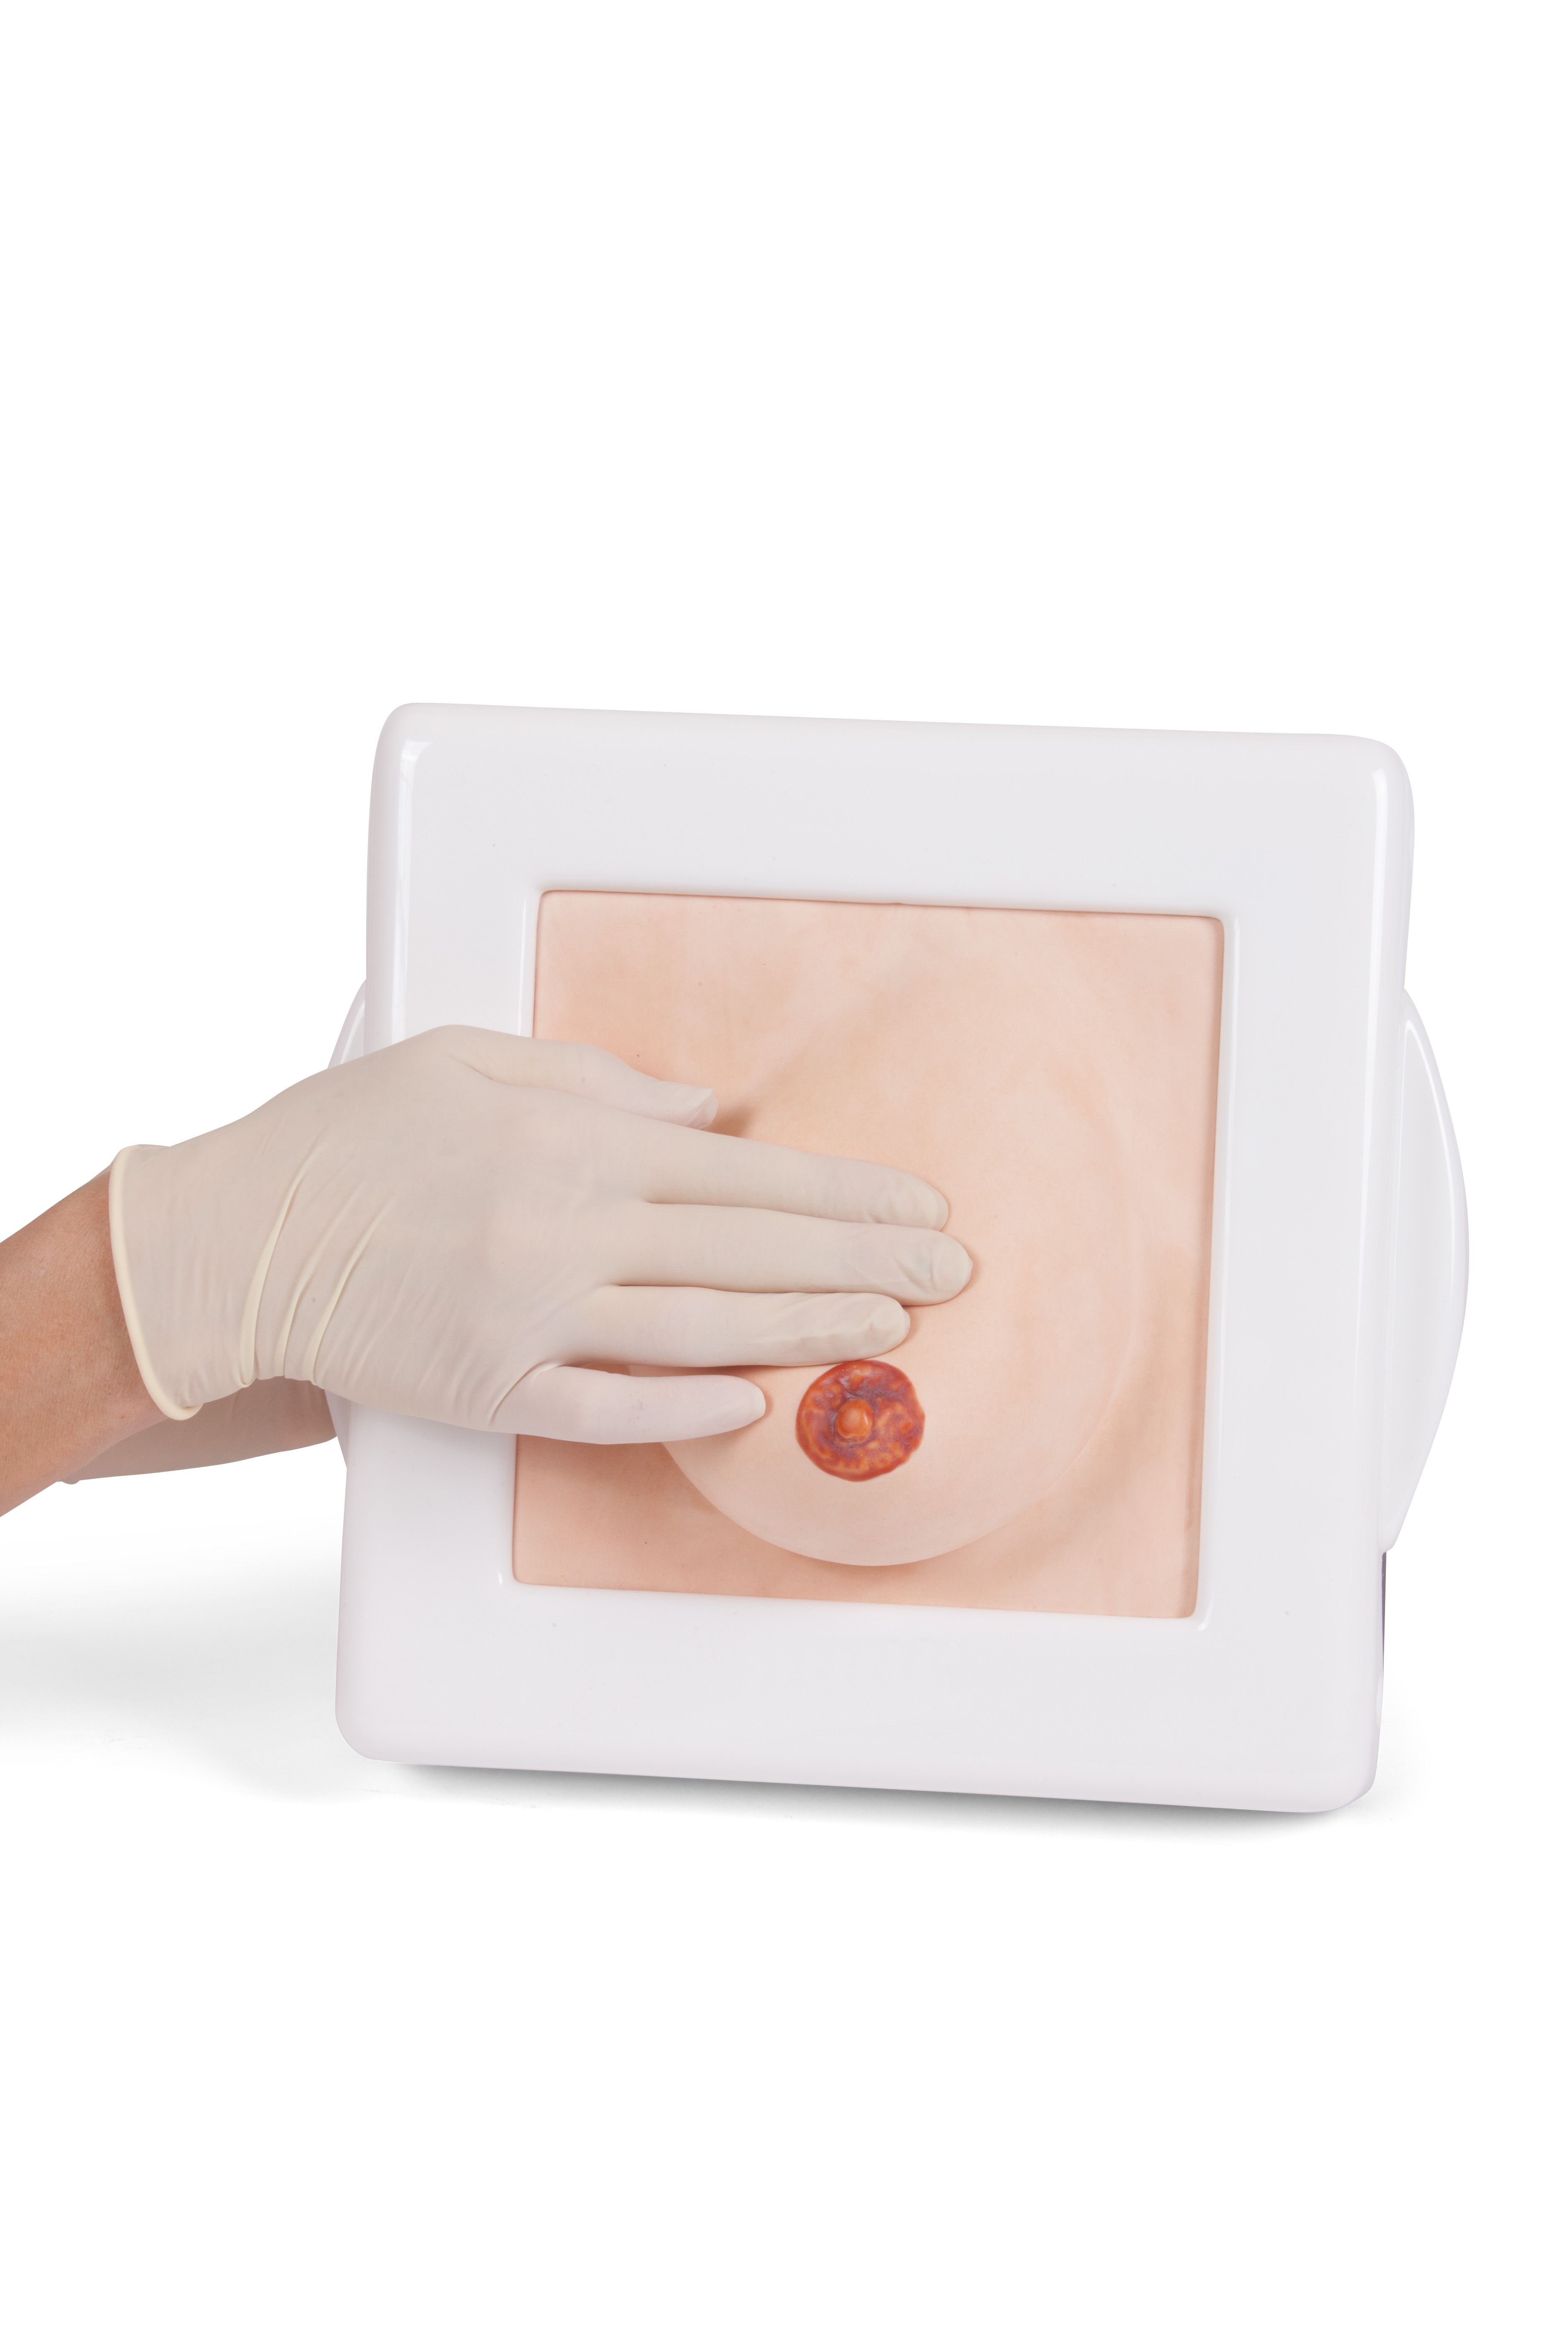 40044-2-examination-diagnostic-breast-trainer-hands-on-examine.jpg